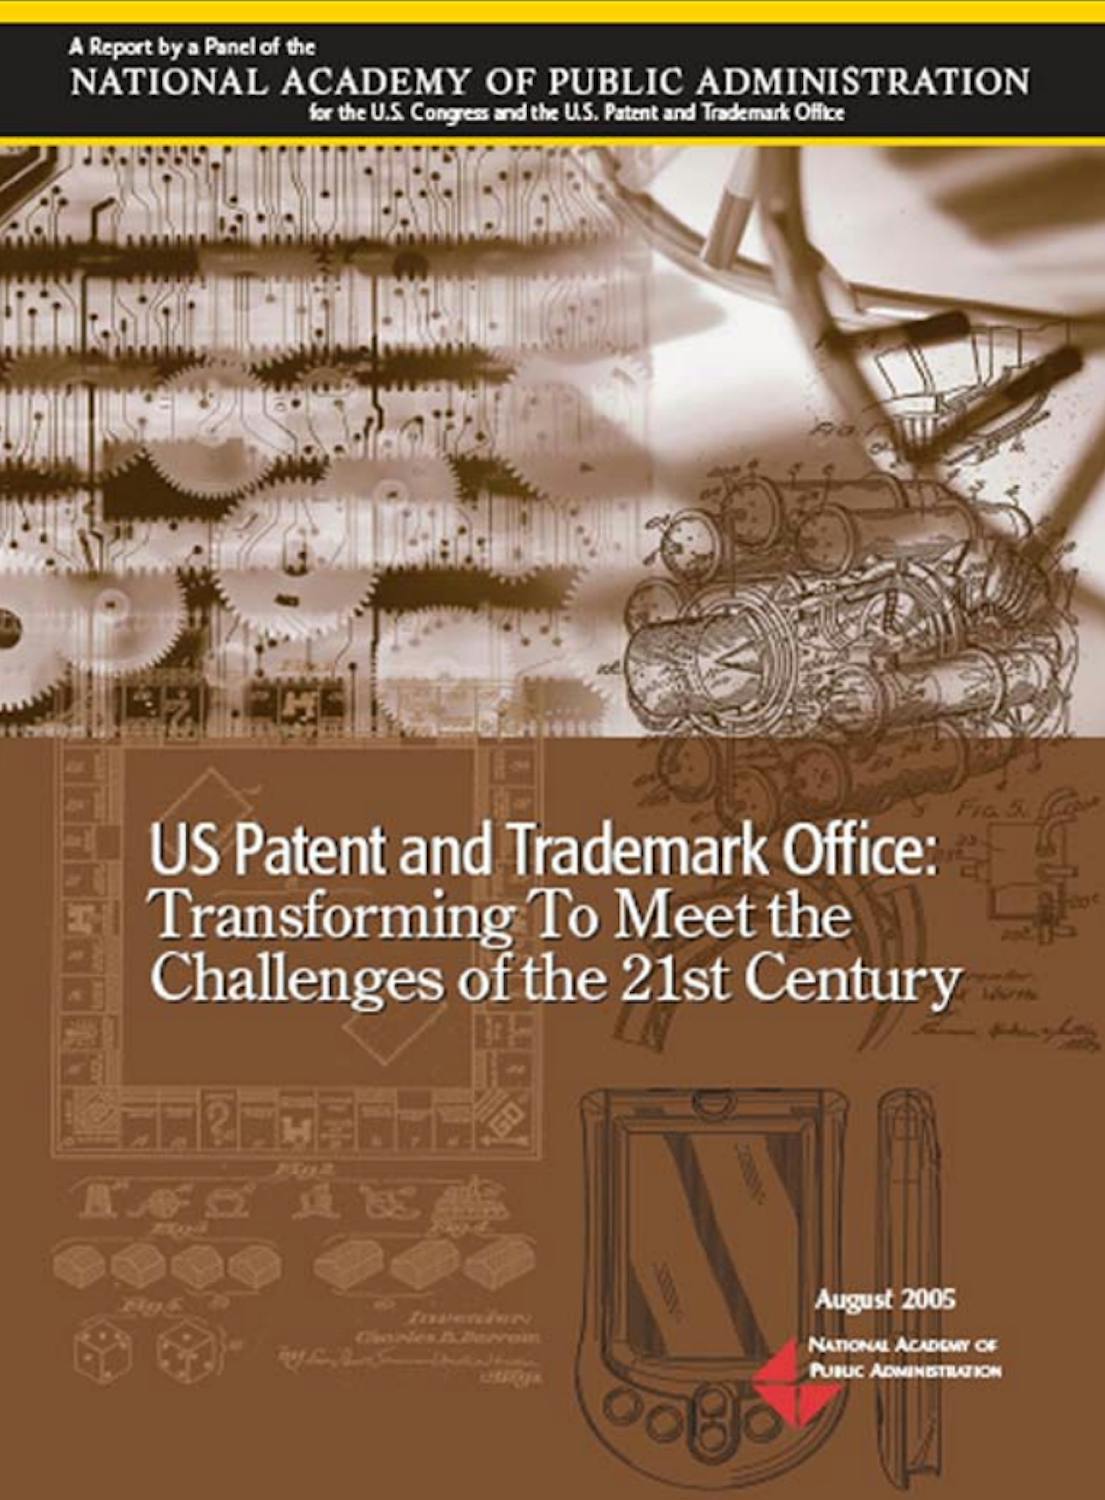 05 US Patentand Trademark Office